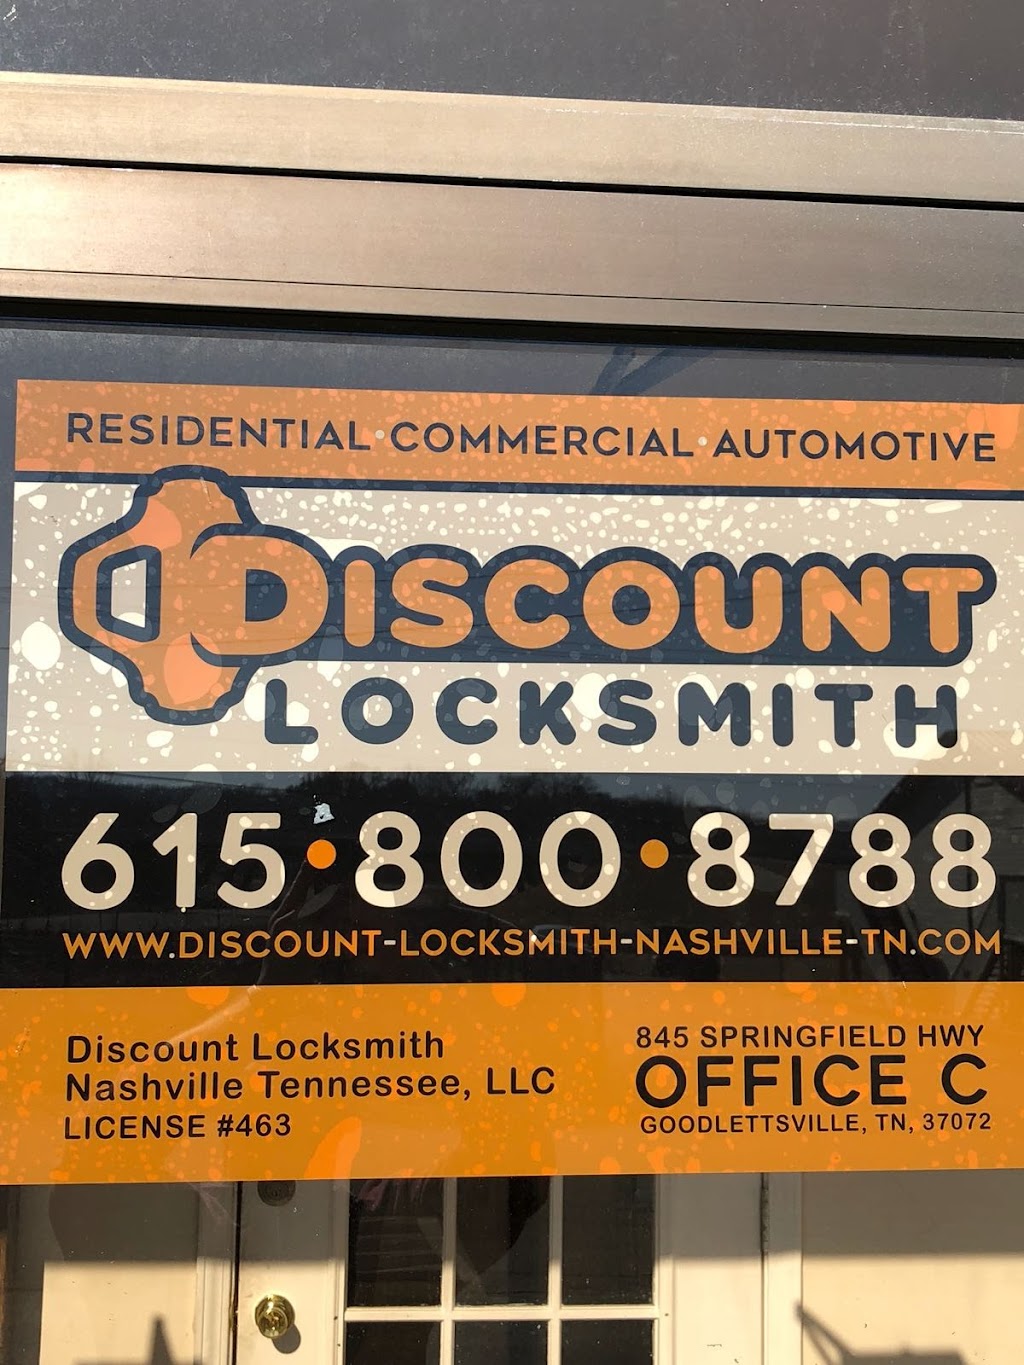 Discount Locksmith of Nashville | 845 Springfield Hwy office c, Goodlettsville, TN 37072, USA | Phone: (615) 800-8788